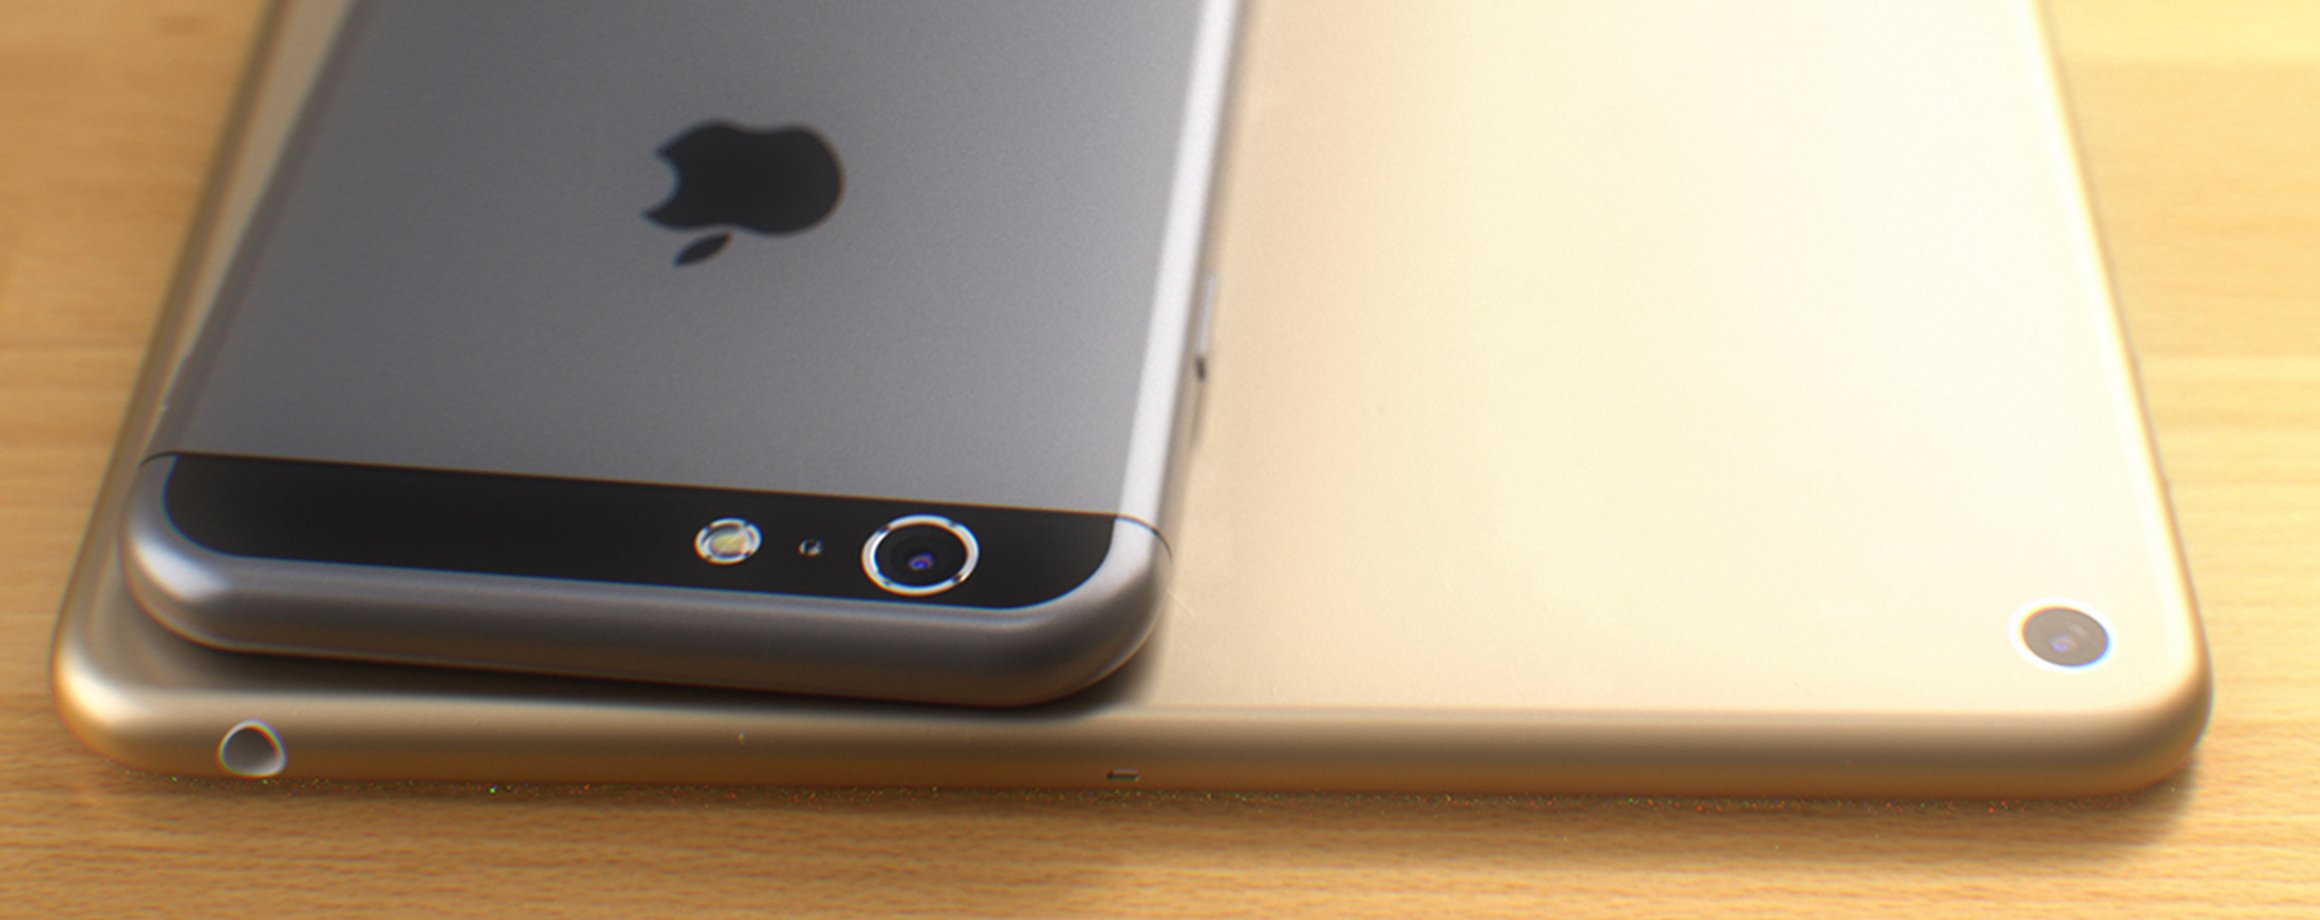 Apple iPhone 6 für 699€ ab 19.09.2014? 1